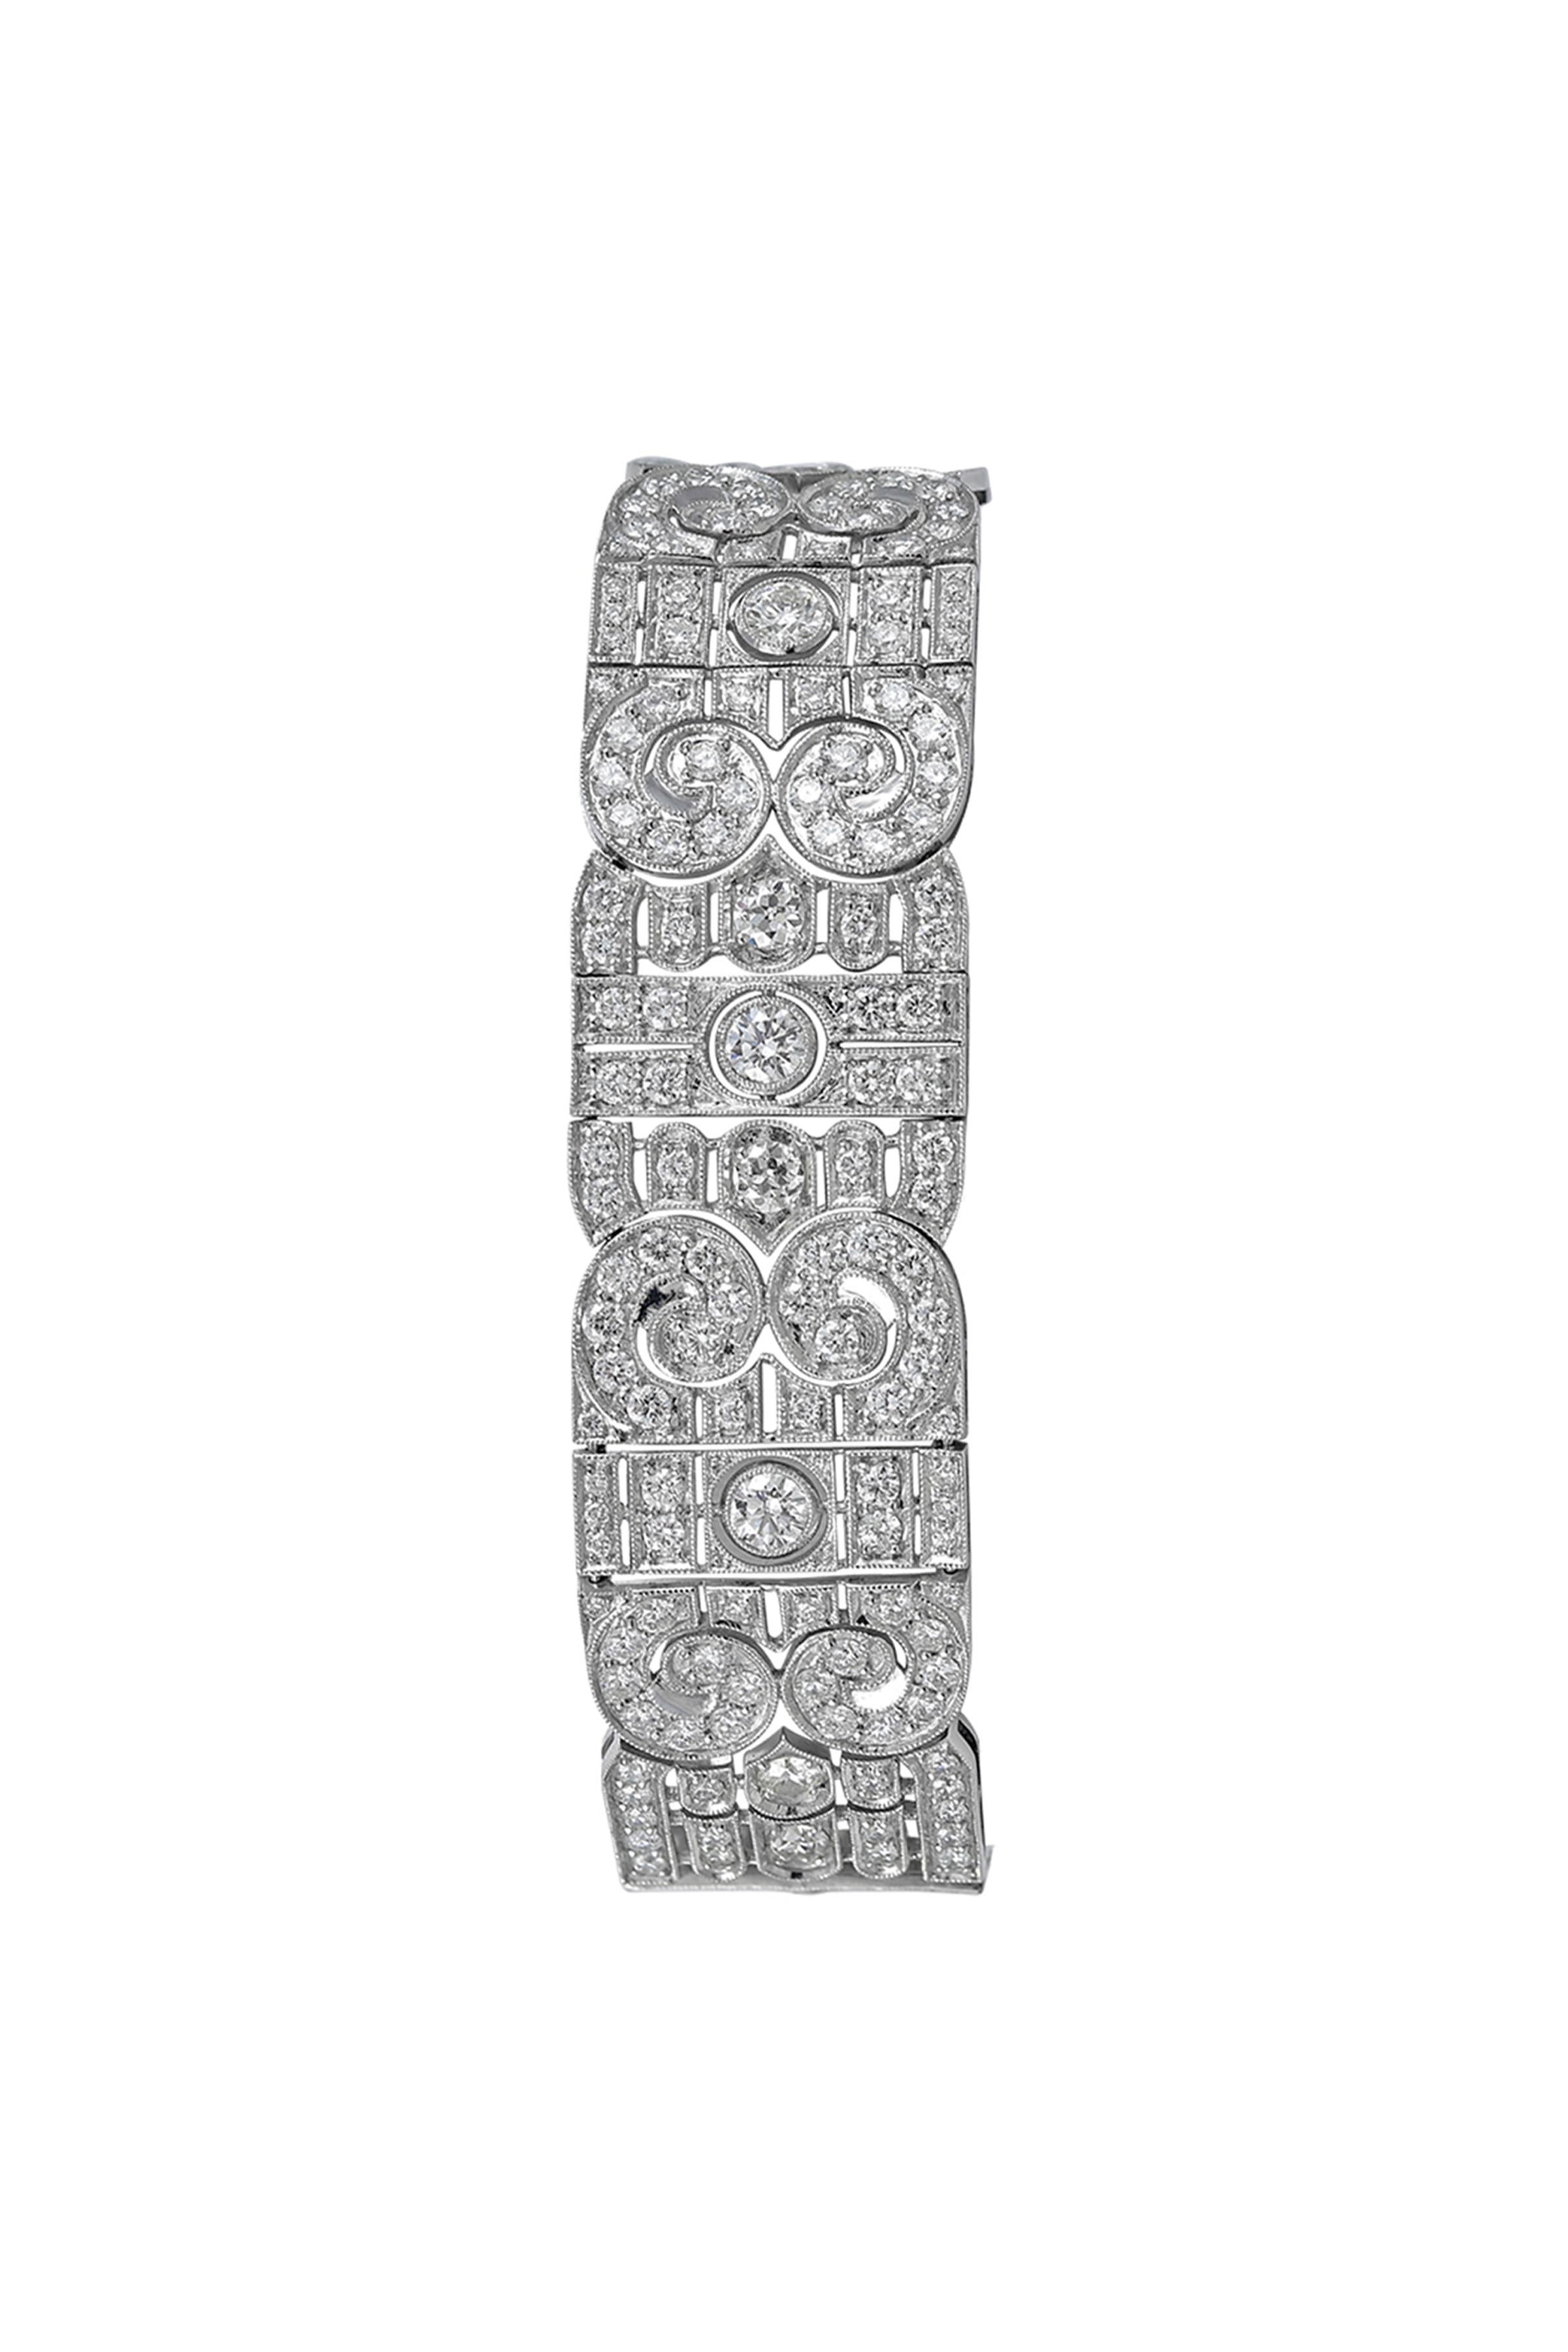 Round Cut Sophia D. 21.37 Carat All Diamond Platinum Bracelet For Sale